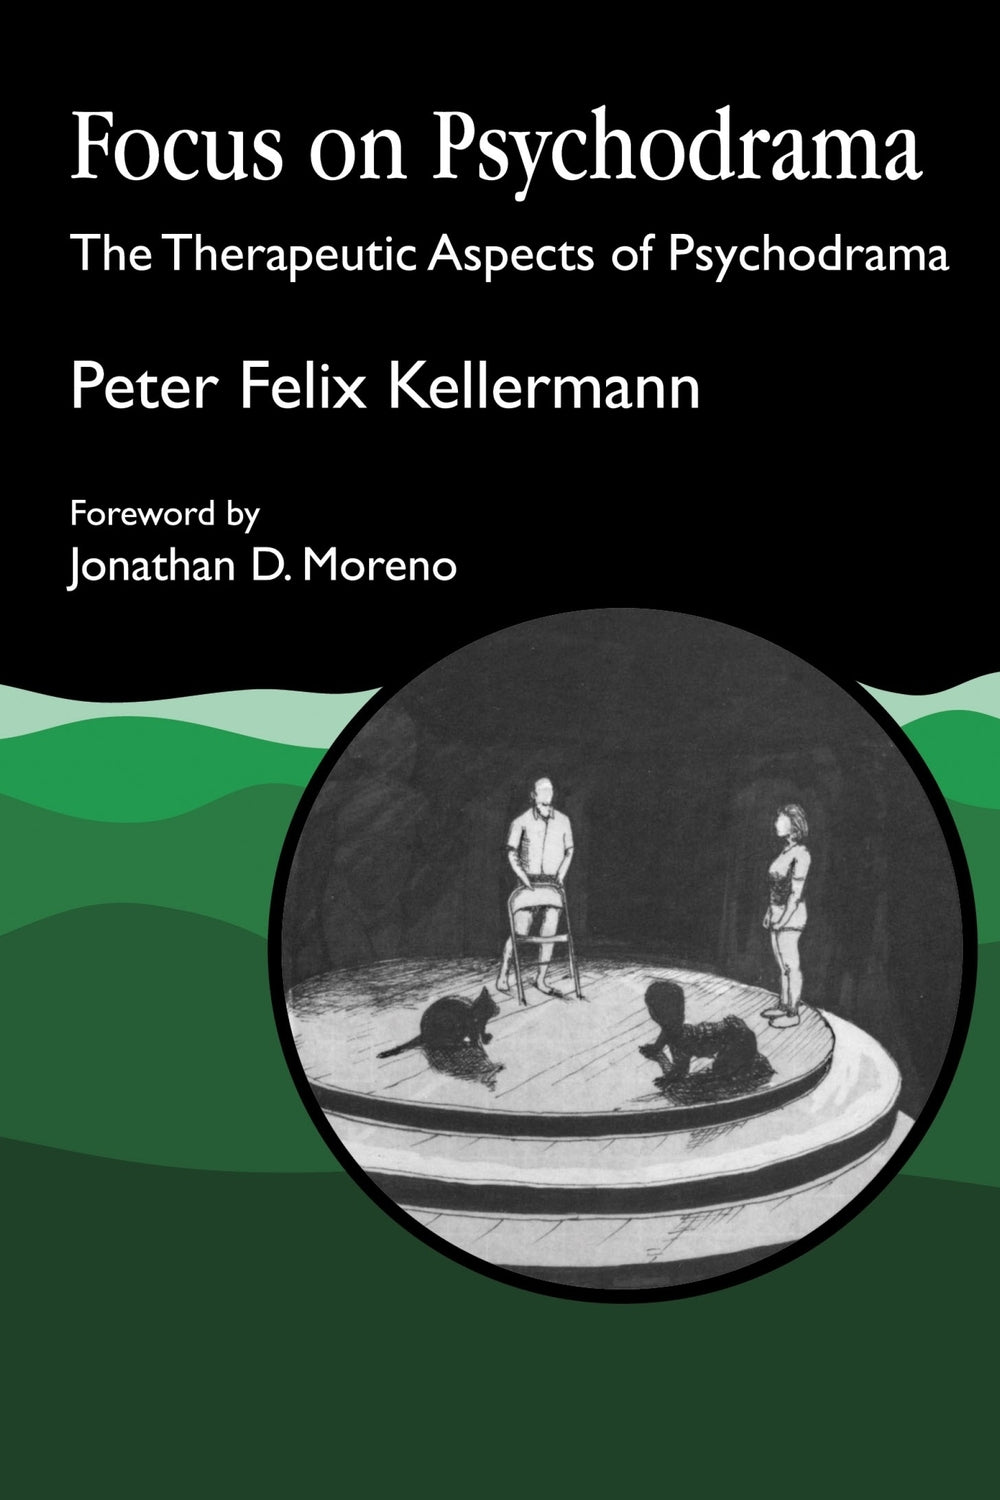 Focus on Psychodrama by Peter Felix Kellermann